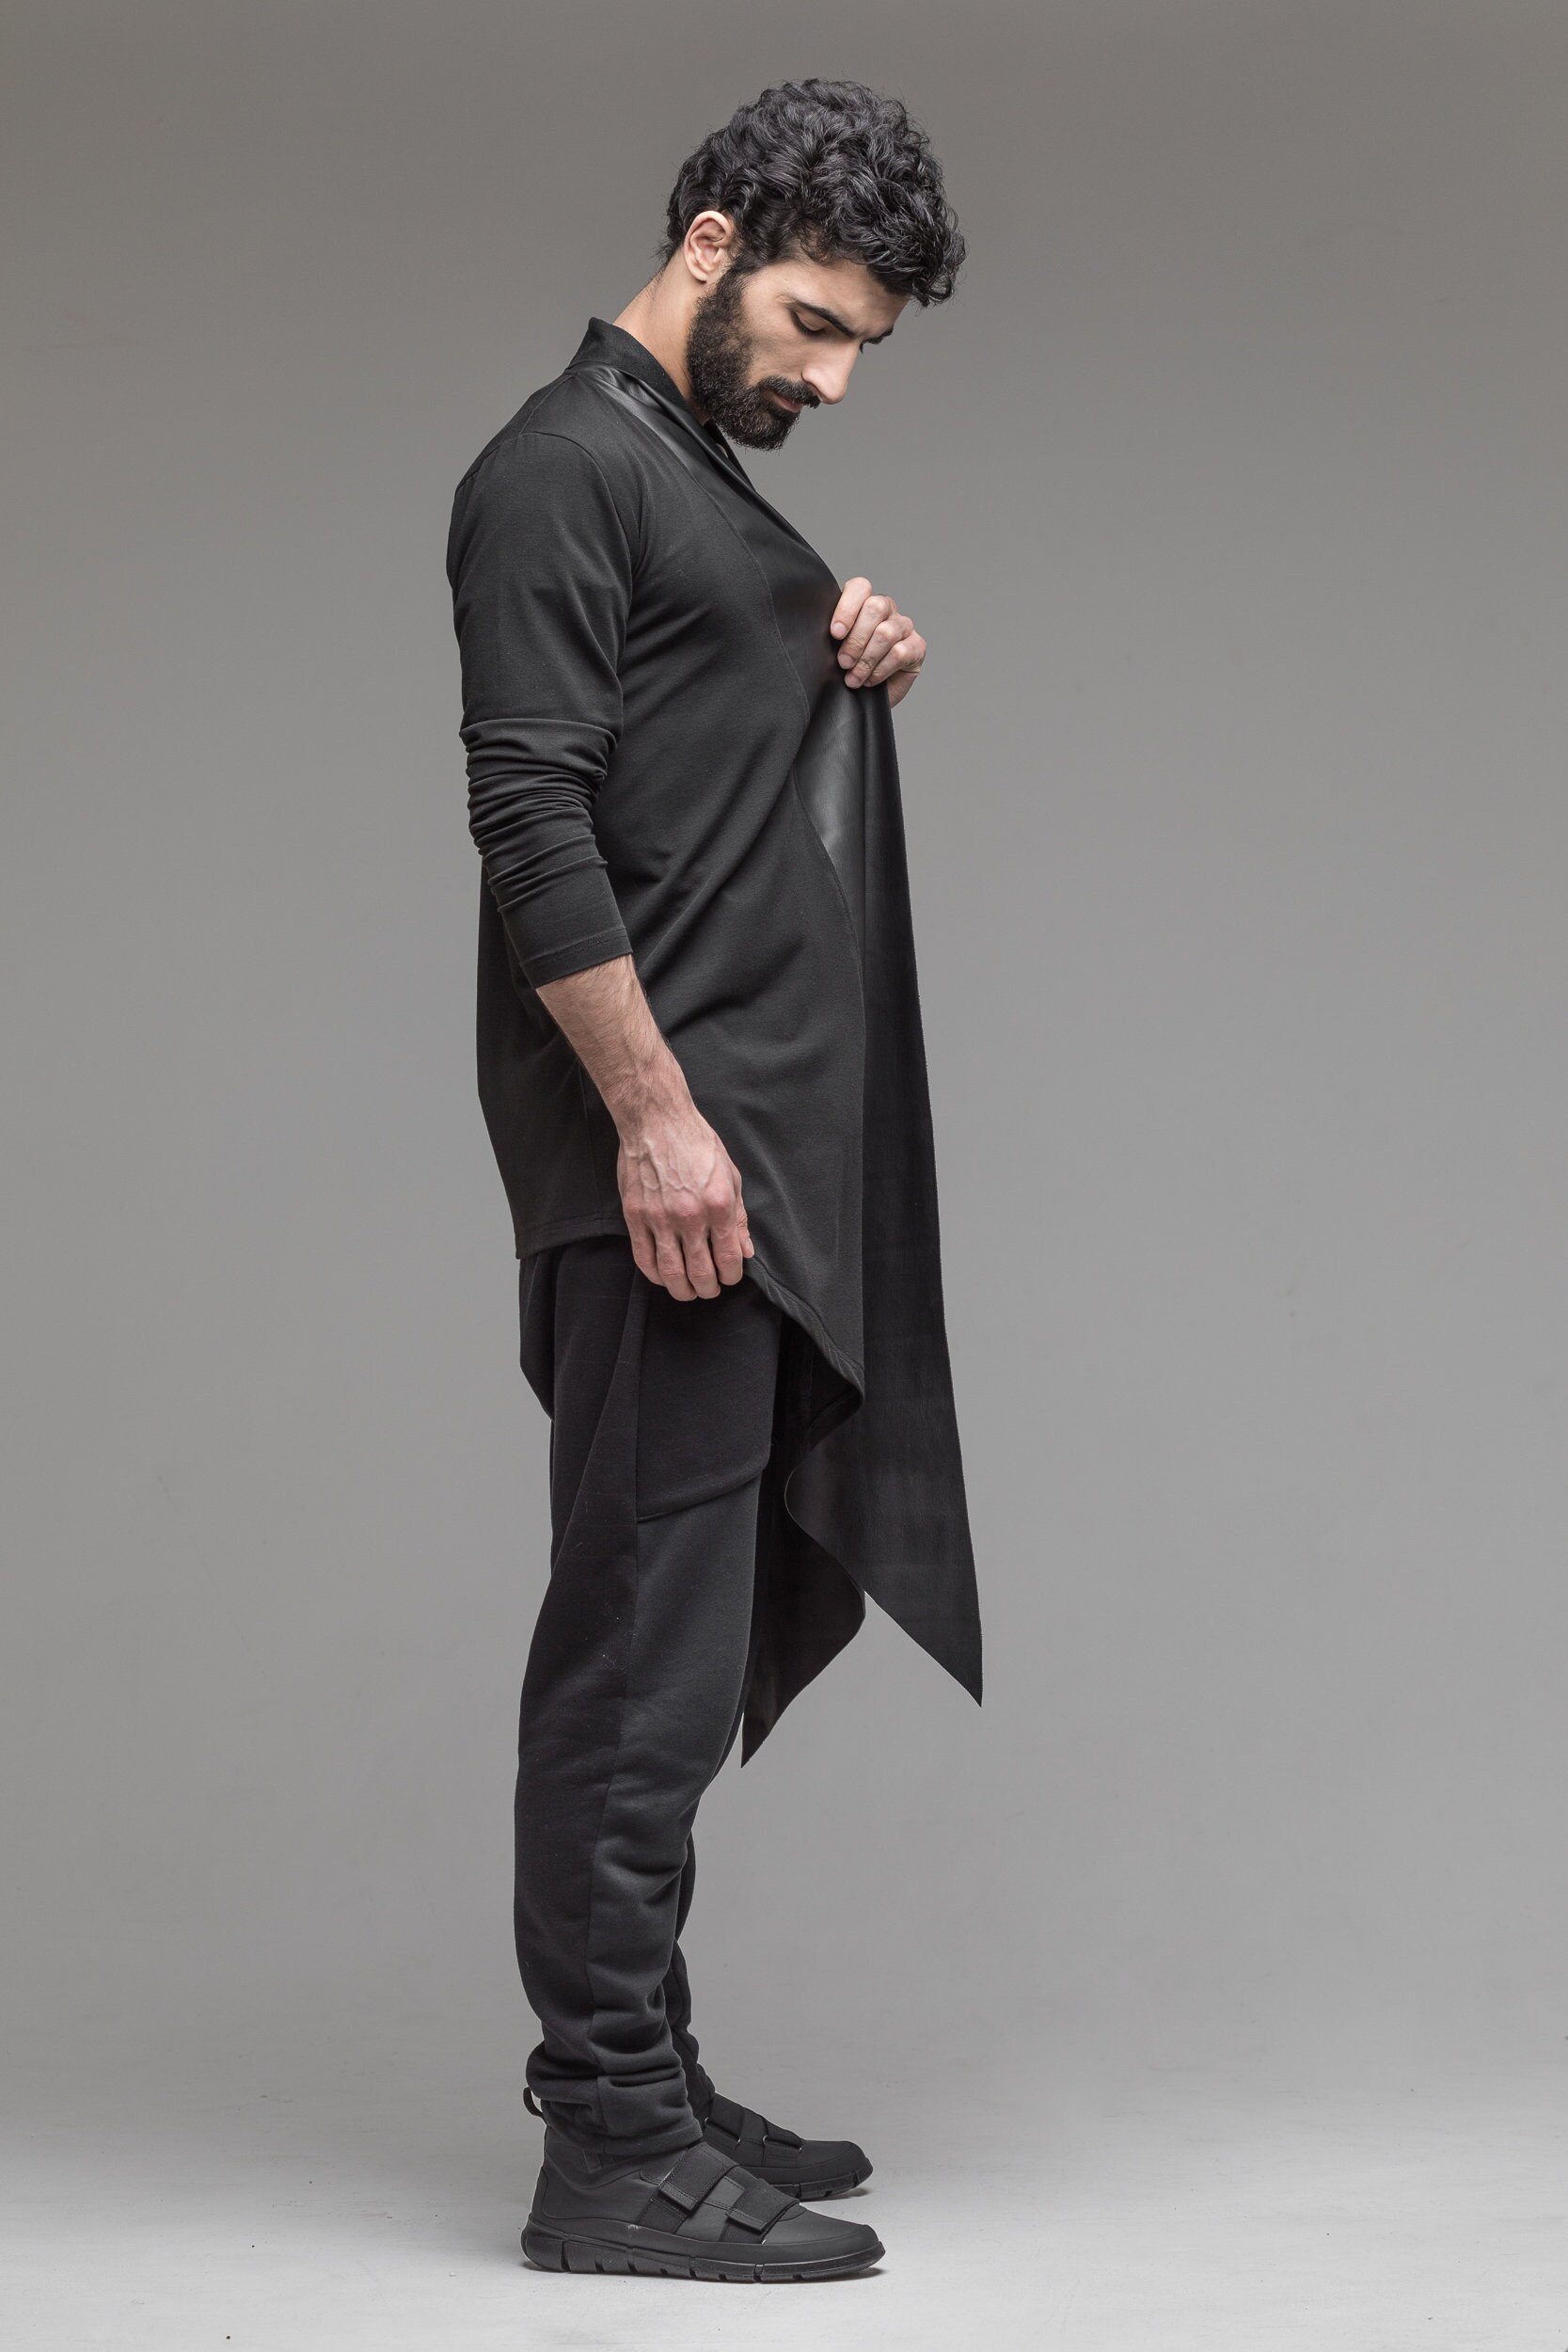 Leather draped jacket men black cardigan asymmetric wrap | Etsy